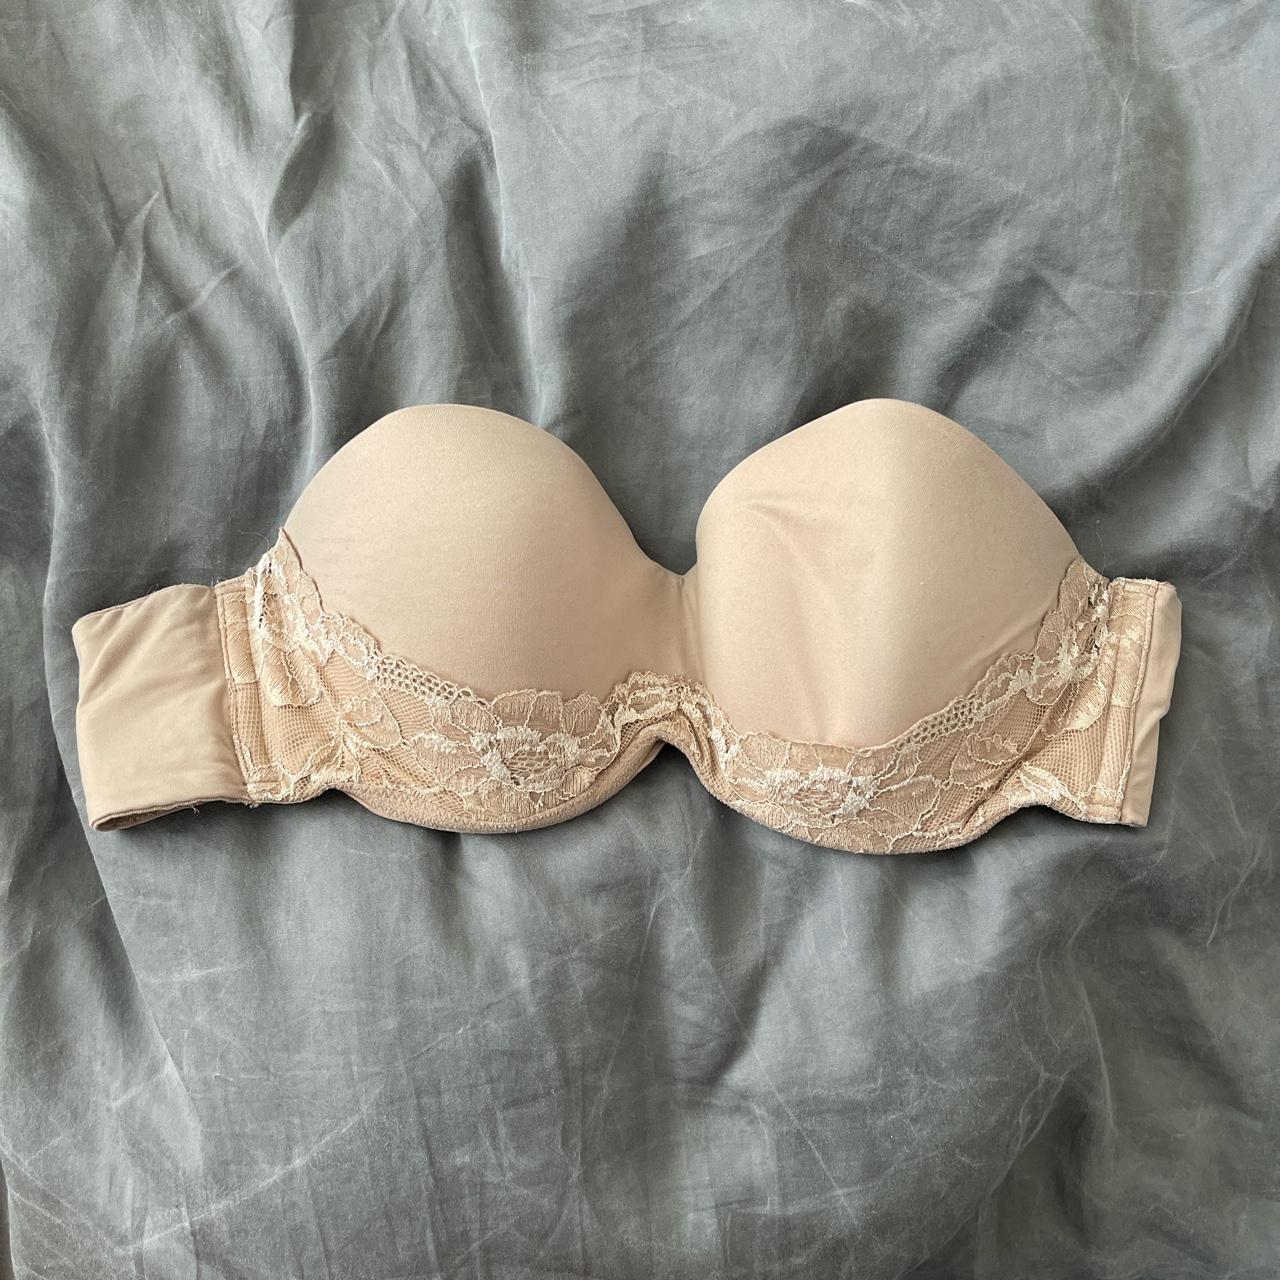 Victoria's secret bra size 38 B - Depop